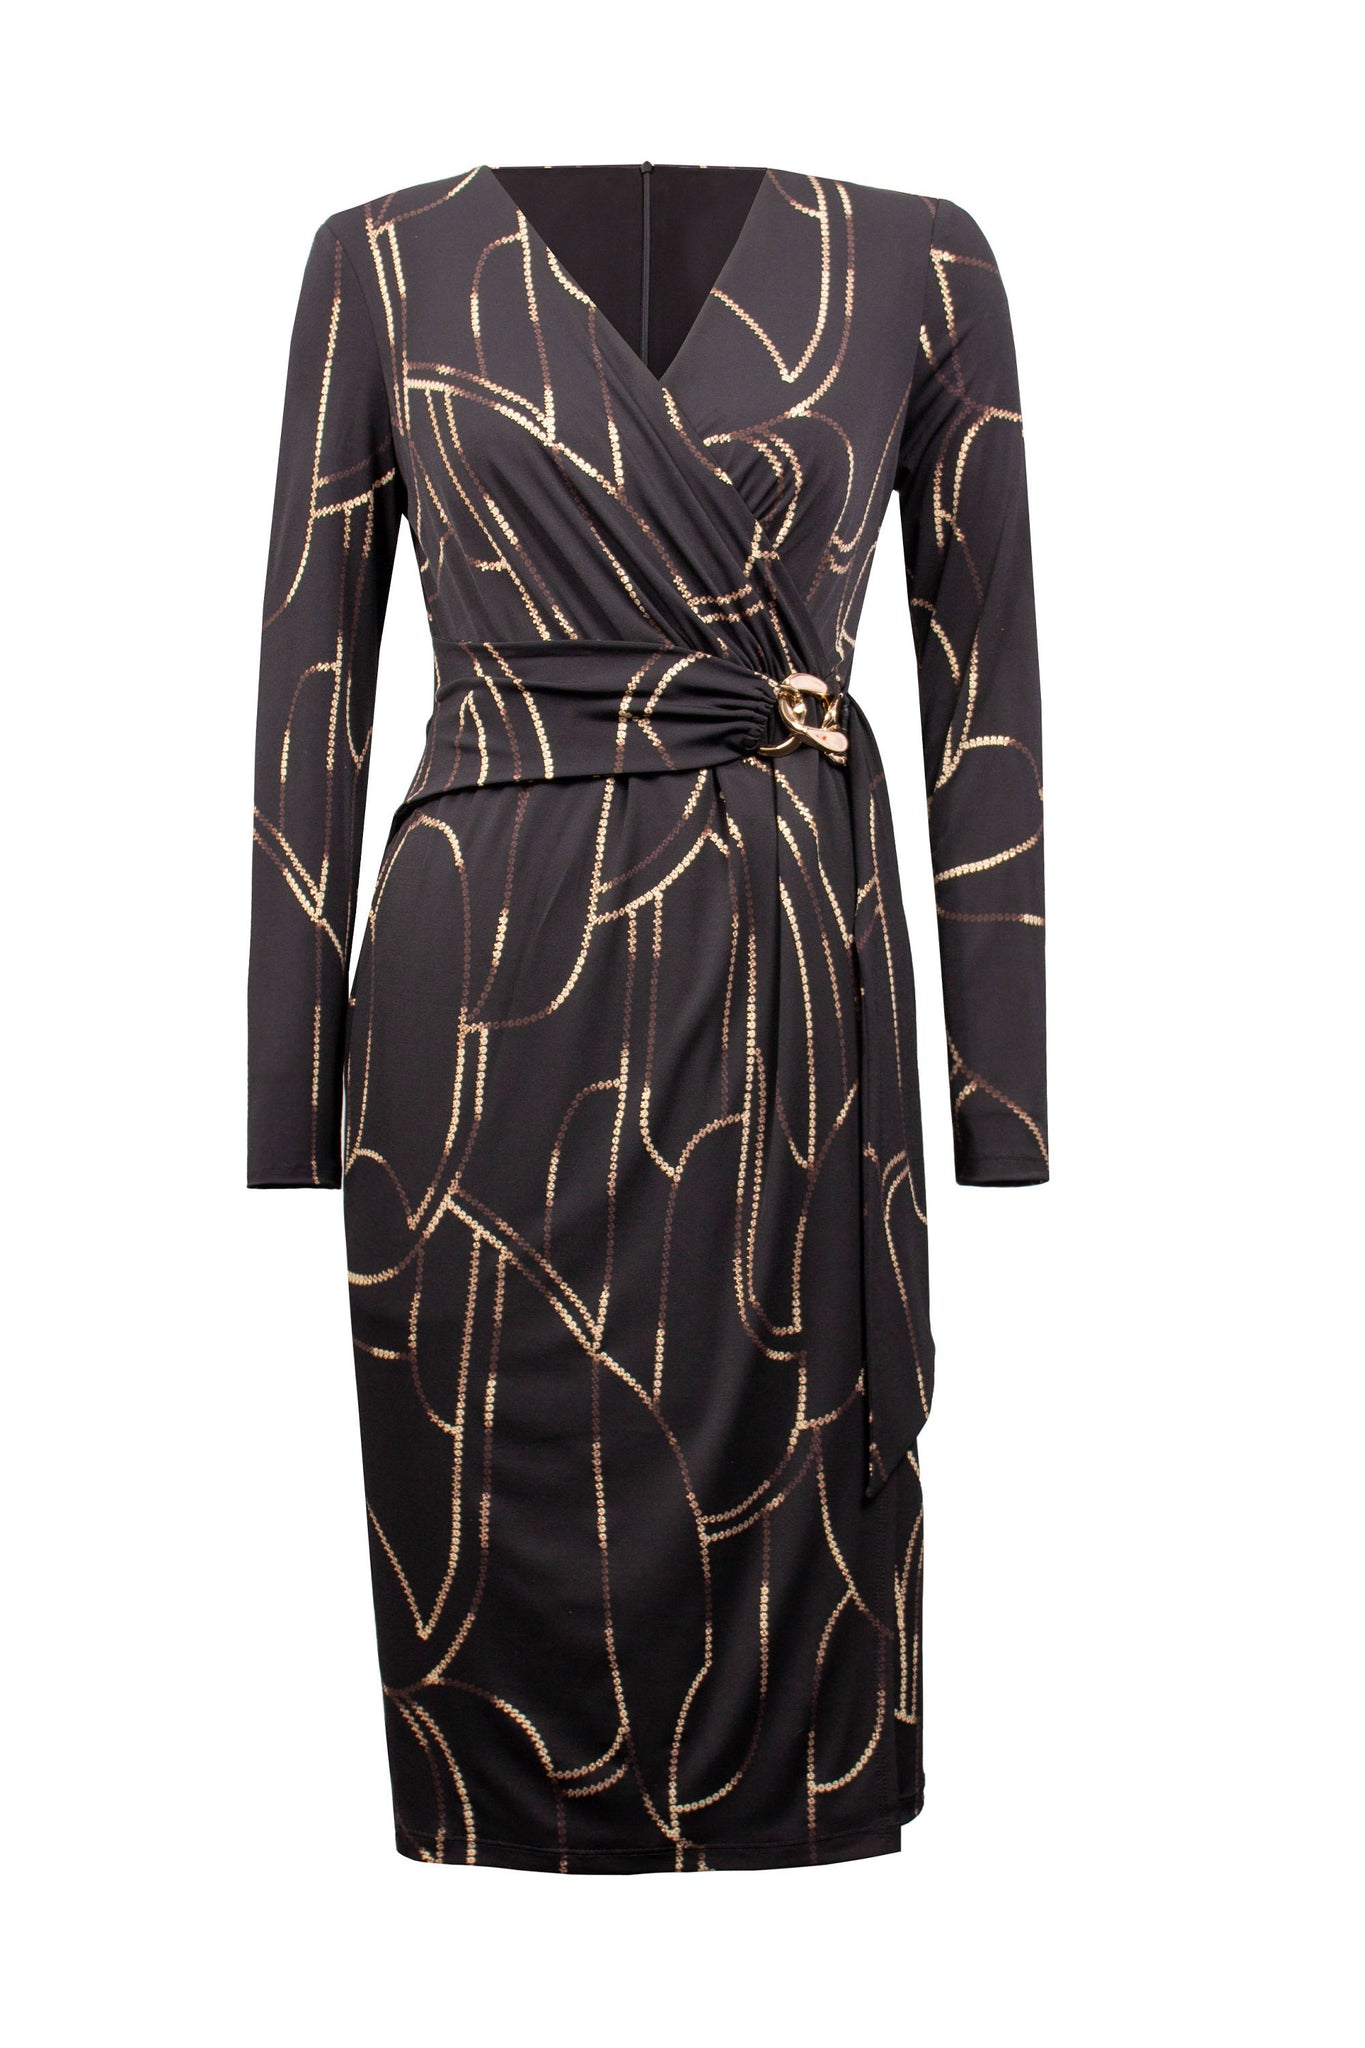 Printed Sequin Ornamental Metal Detail Dress. Style JR224284